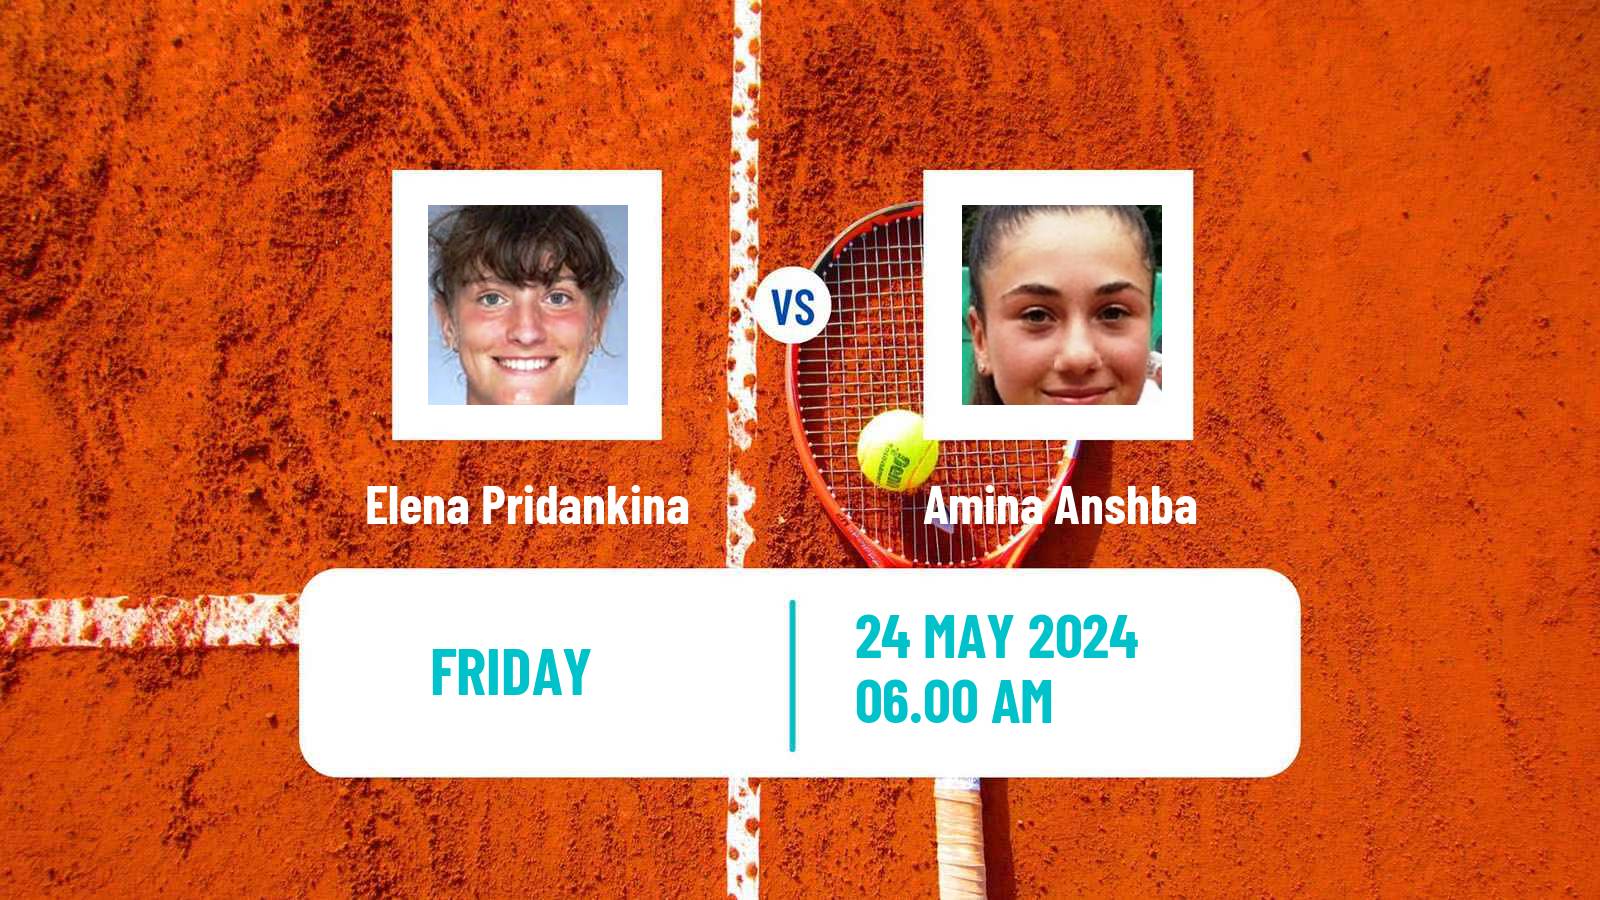 Tennis ITF W75 Grado Women Elena Pridankina - Amina Anshba